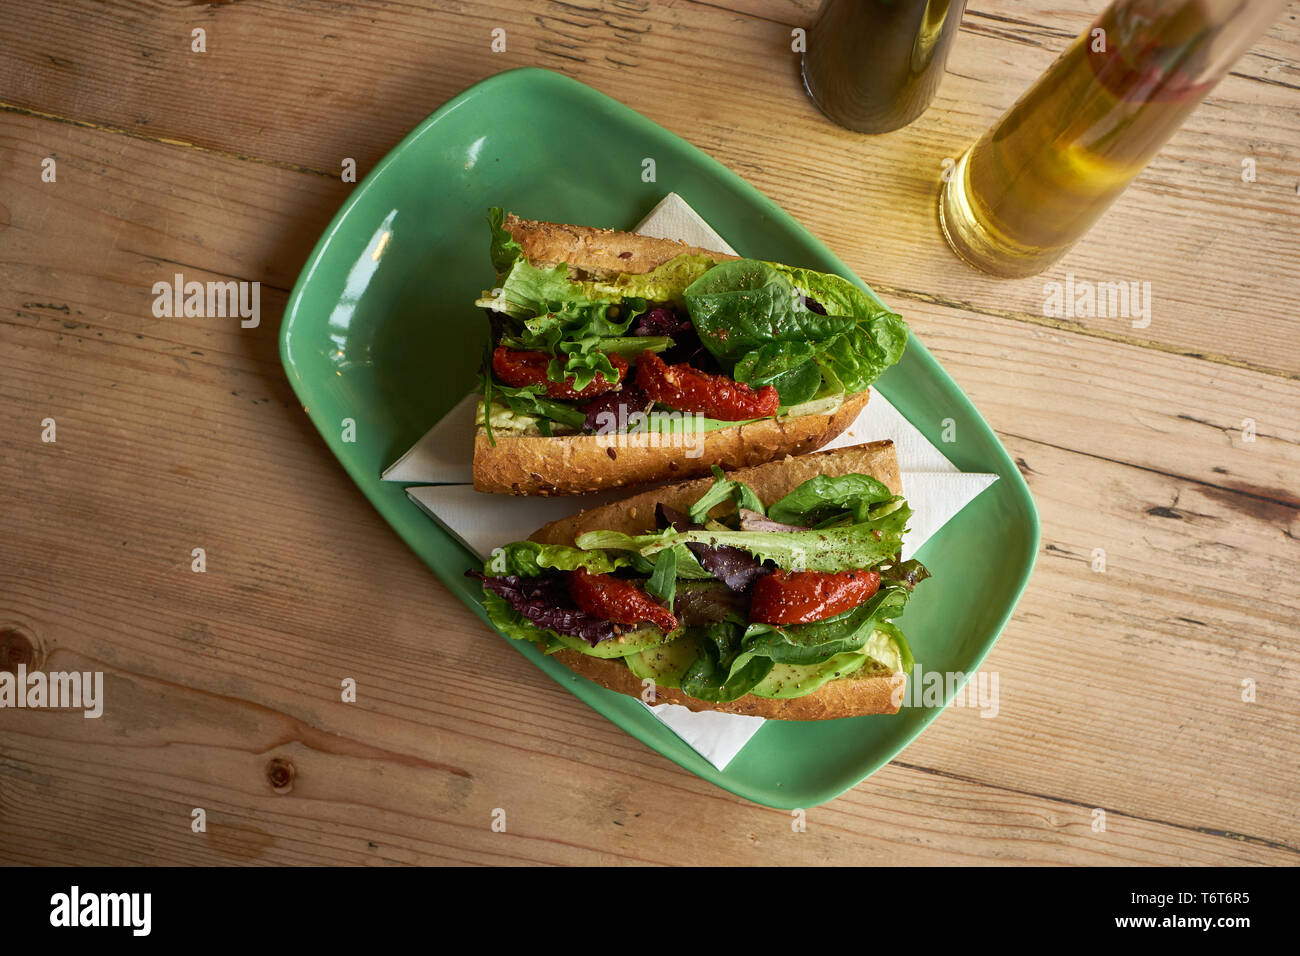 Sundried tomato sandwich on wooden table Stock Photo